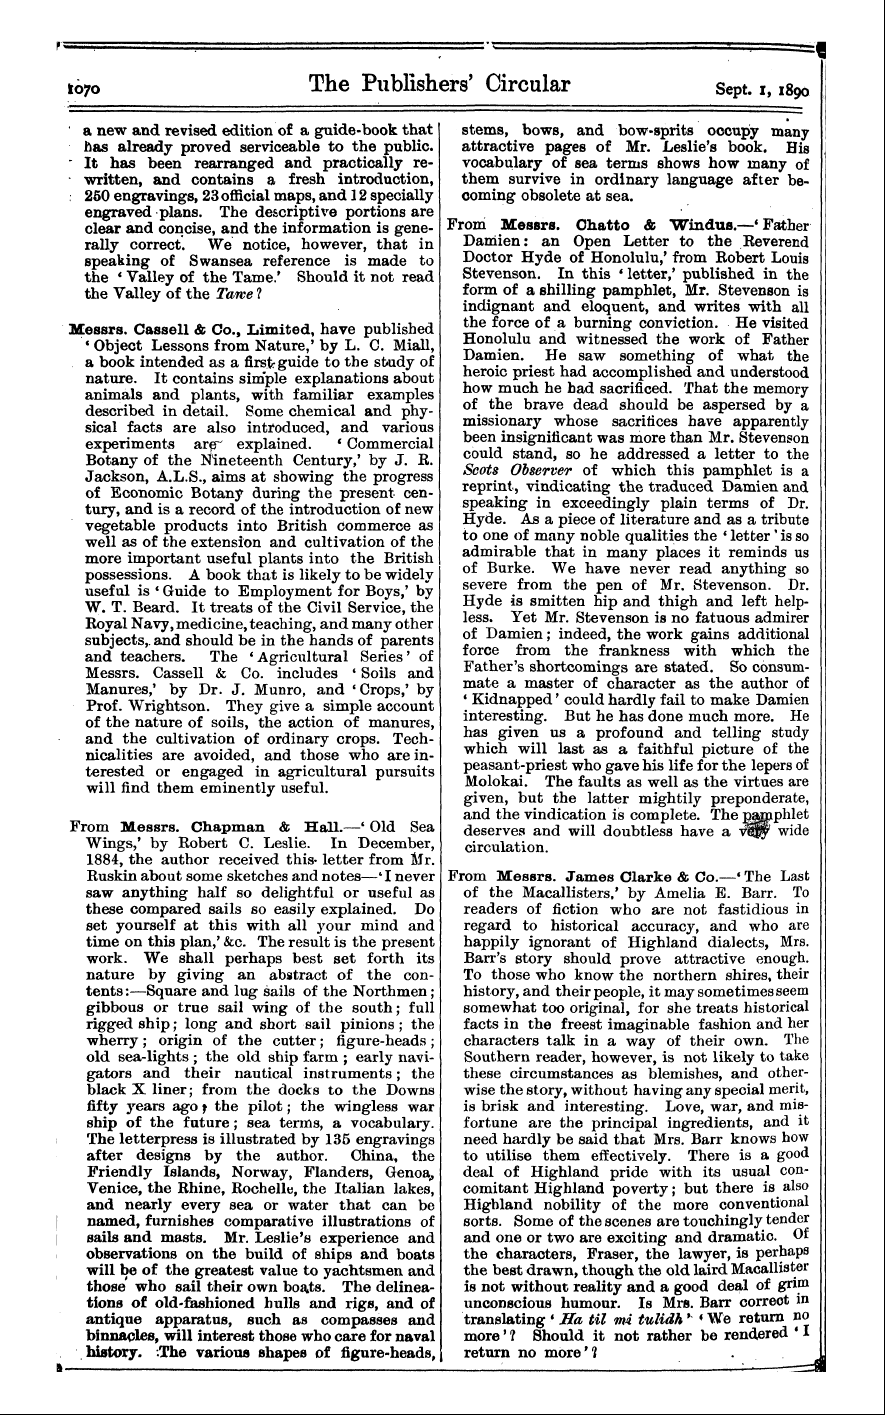 Publishers’ Circular (1880-1890): jS F Y, 1st edition: 16